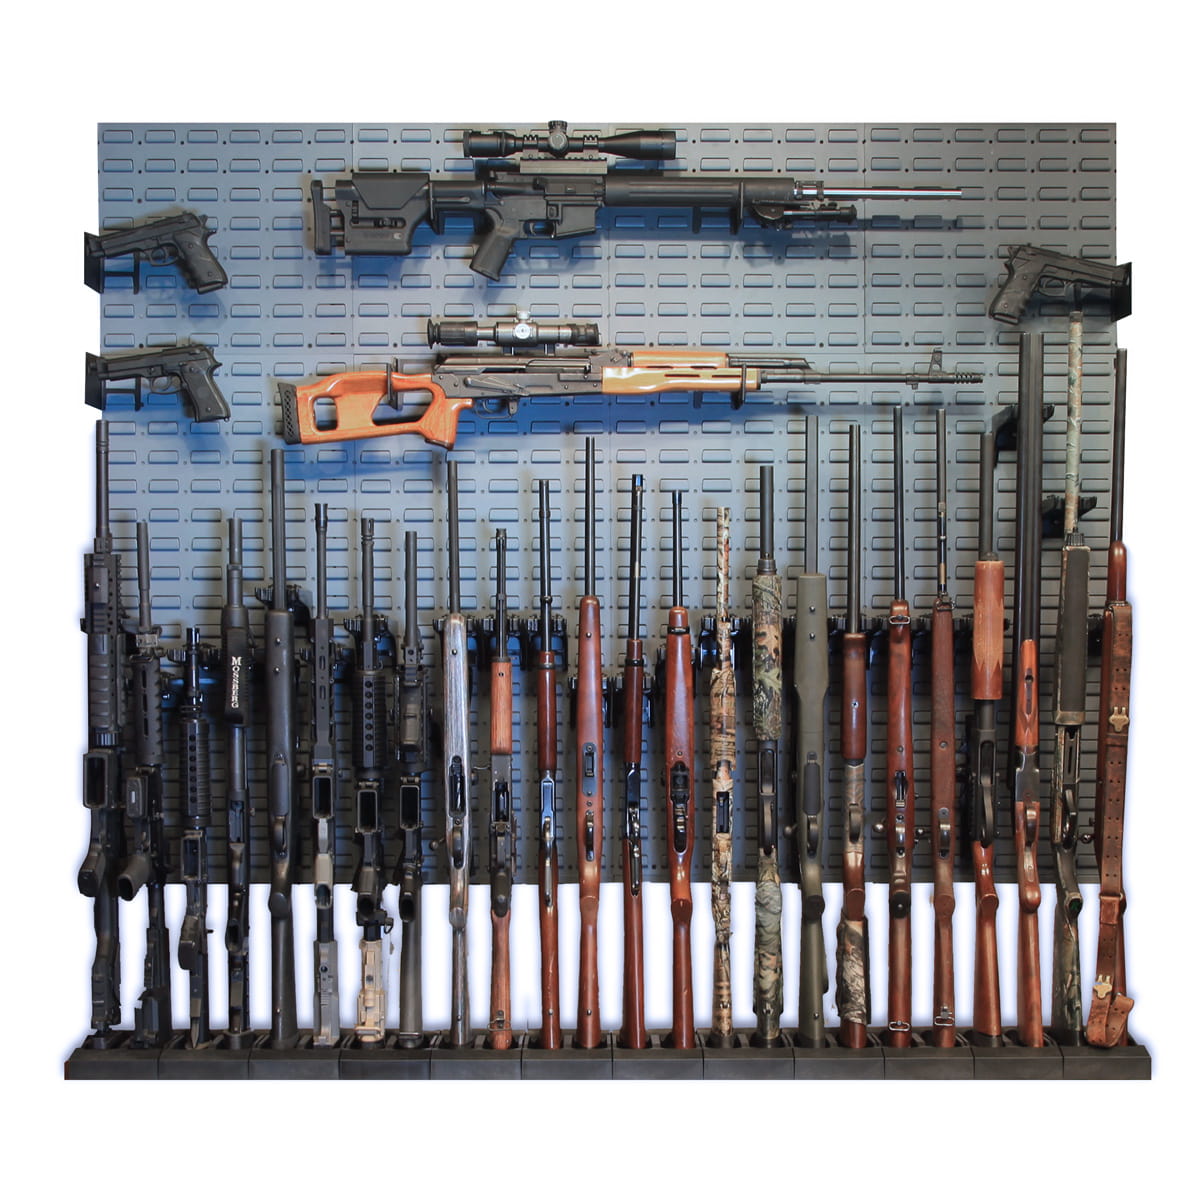 https://www.secureitgunstorage.com/wp-content/uploads/2016/07/secureit-gun-wall-panel-room-vault-armory-kit-1.jpg